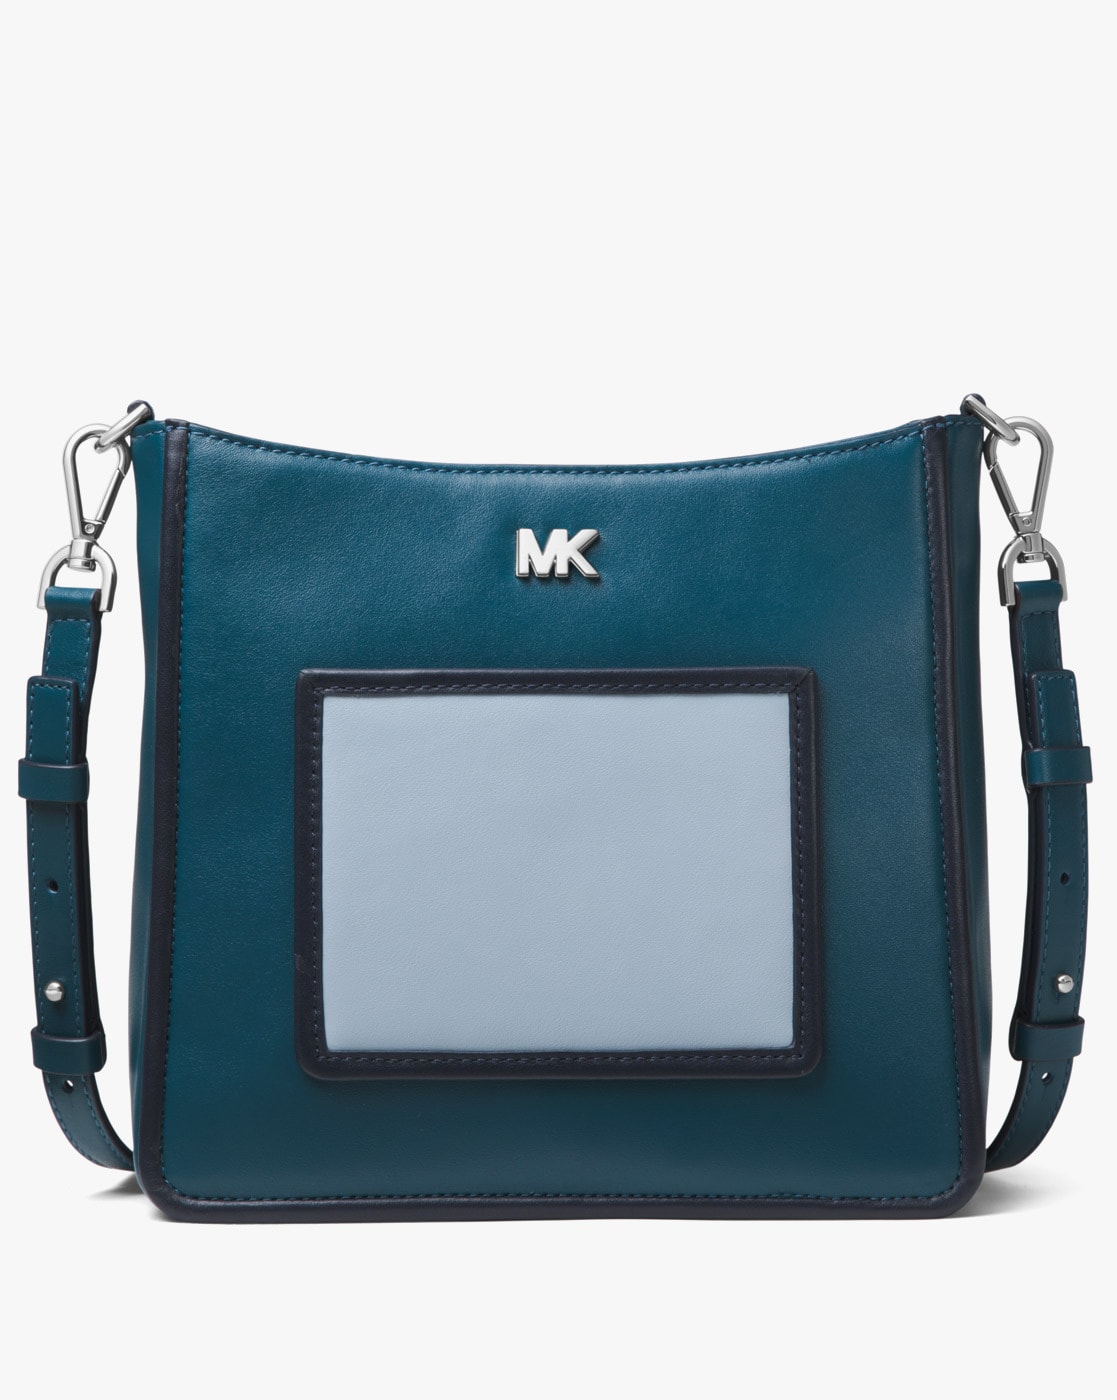 Buy Teal Handbags for Women by Michael Kors Online 